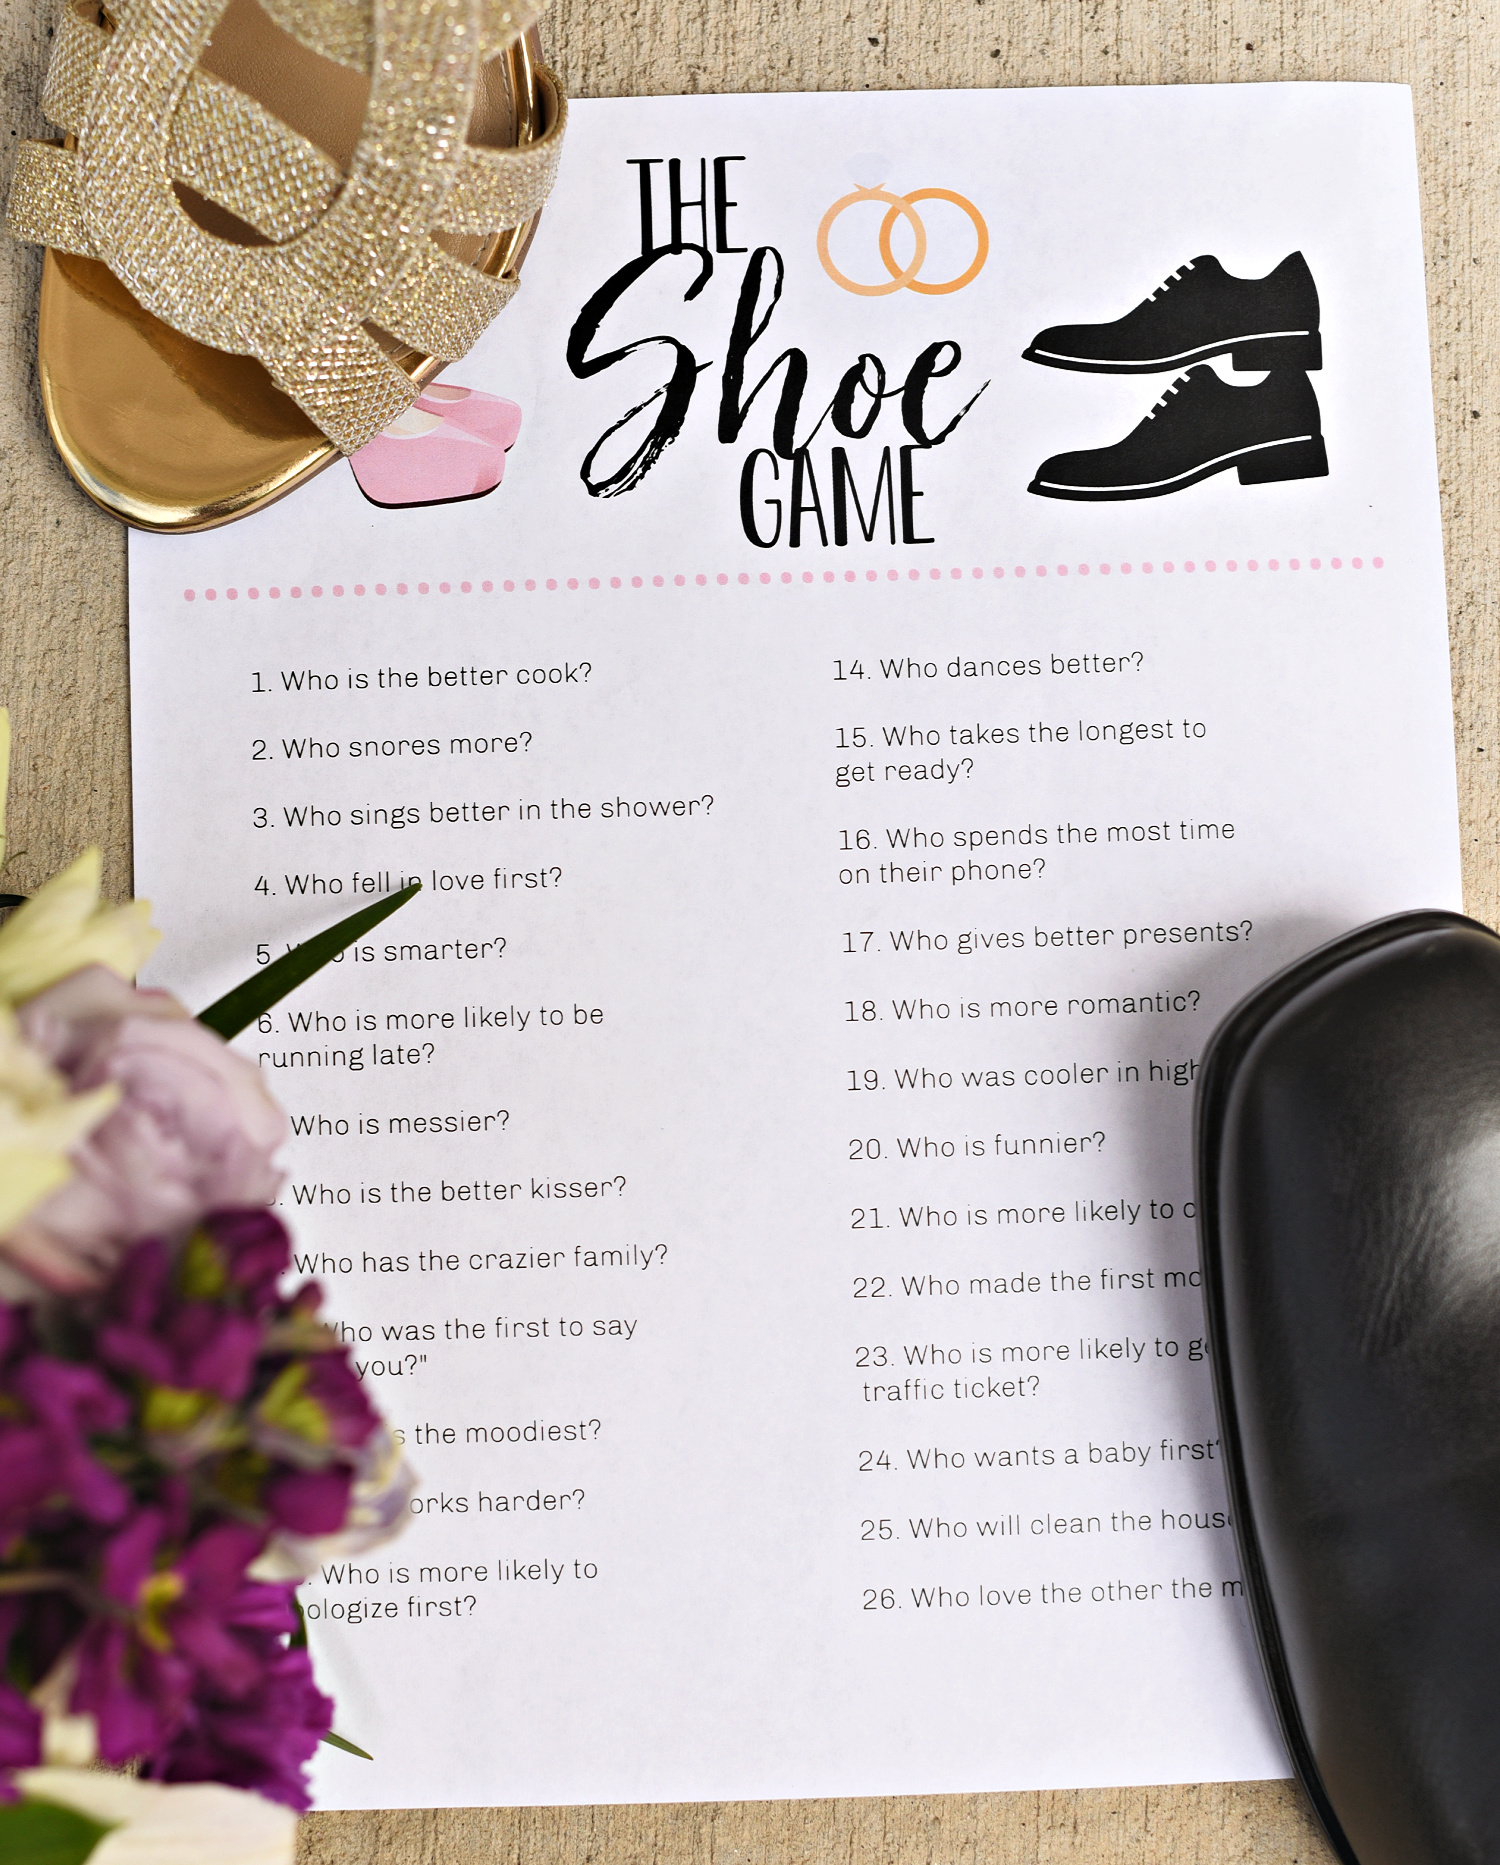 The Wedding Shoe Game